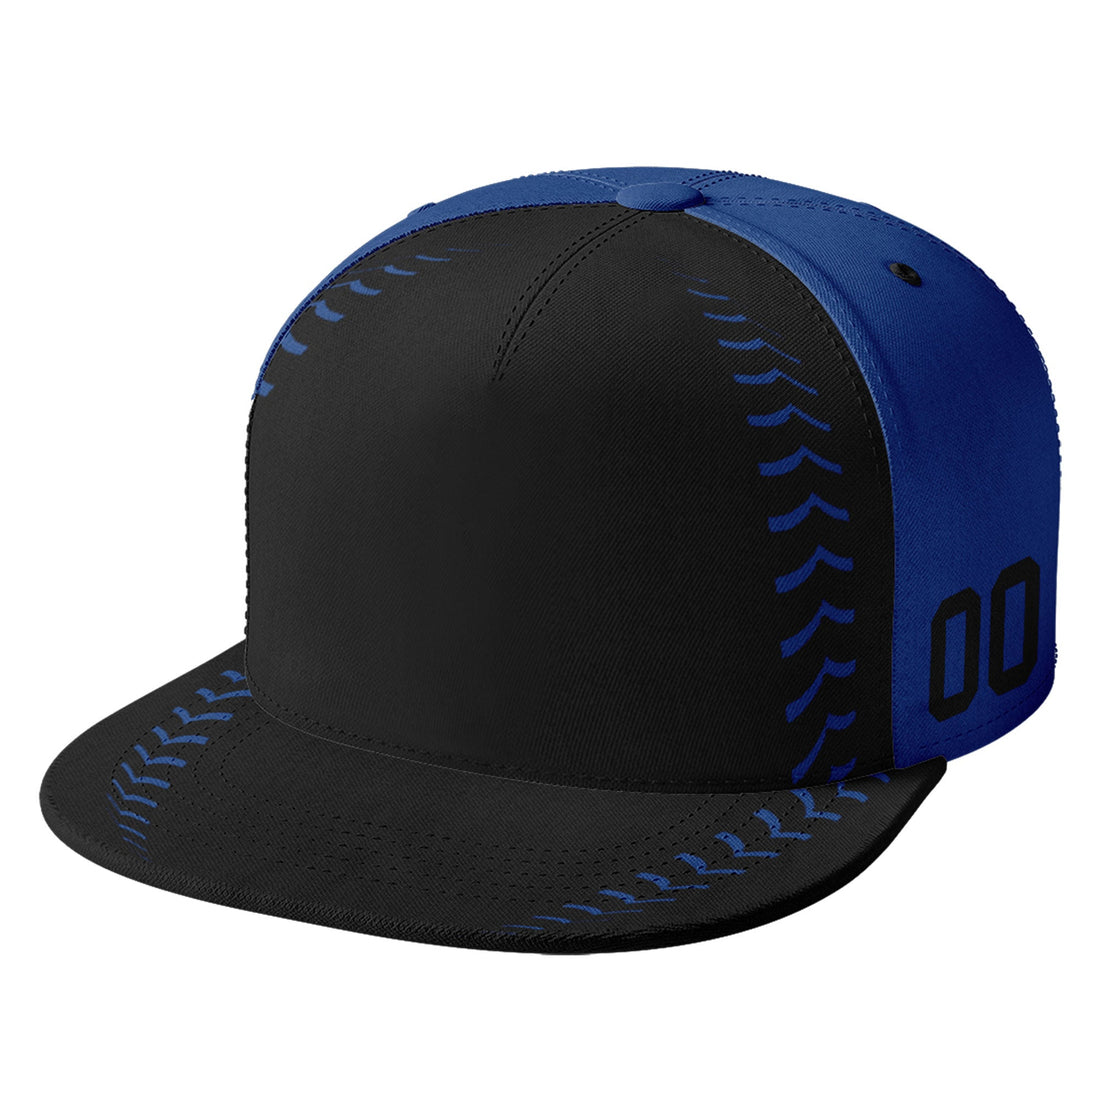 Custom Sport Design Hat Stitched Adjustable Snapback Personalized Baseball Cap PR067B-bd0b00d9-a0